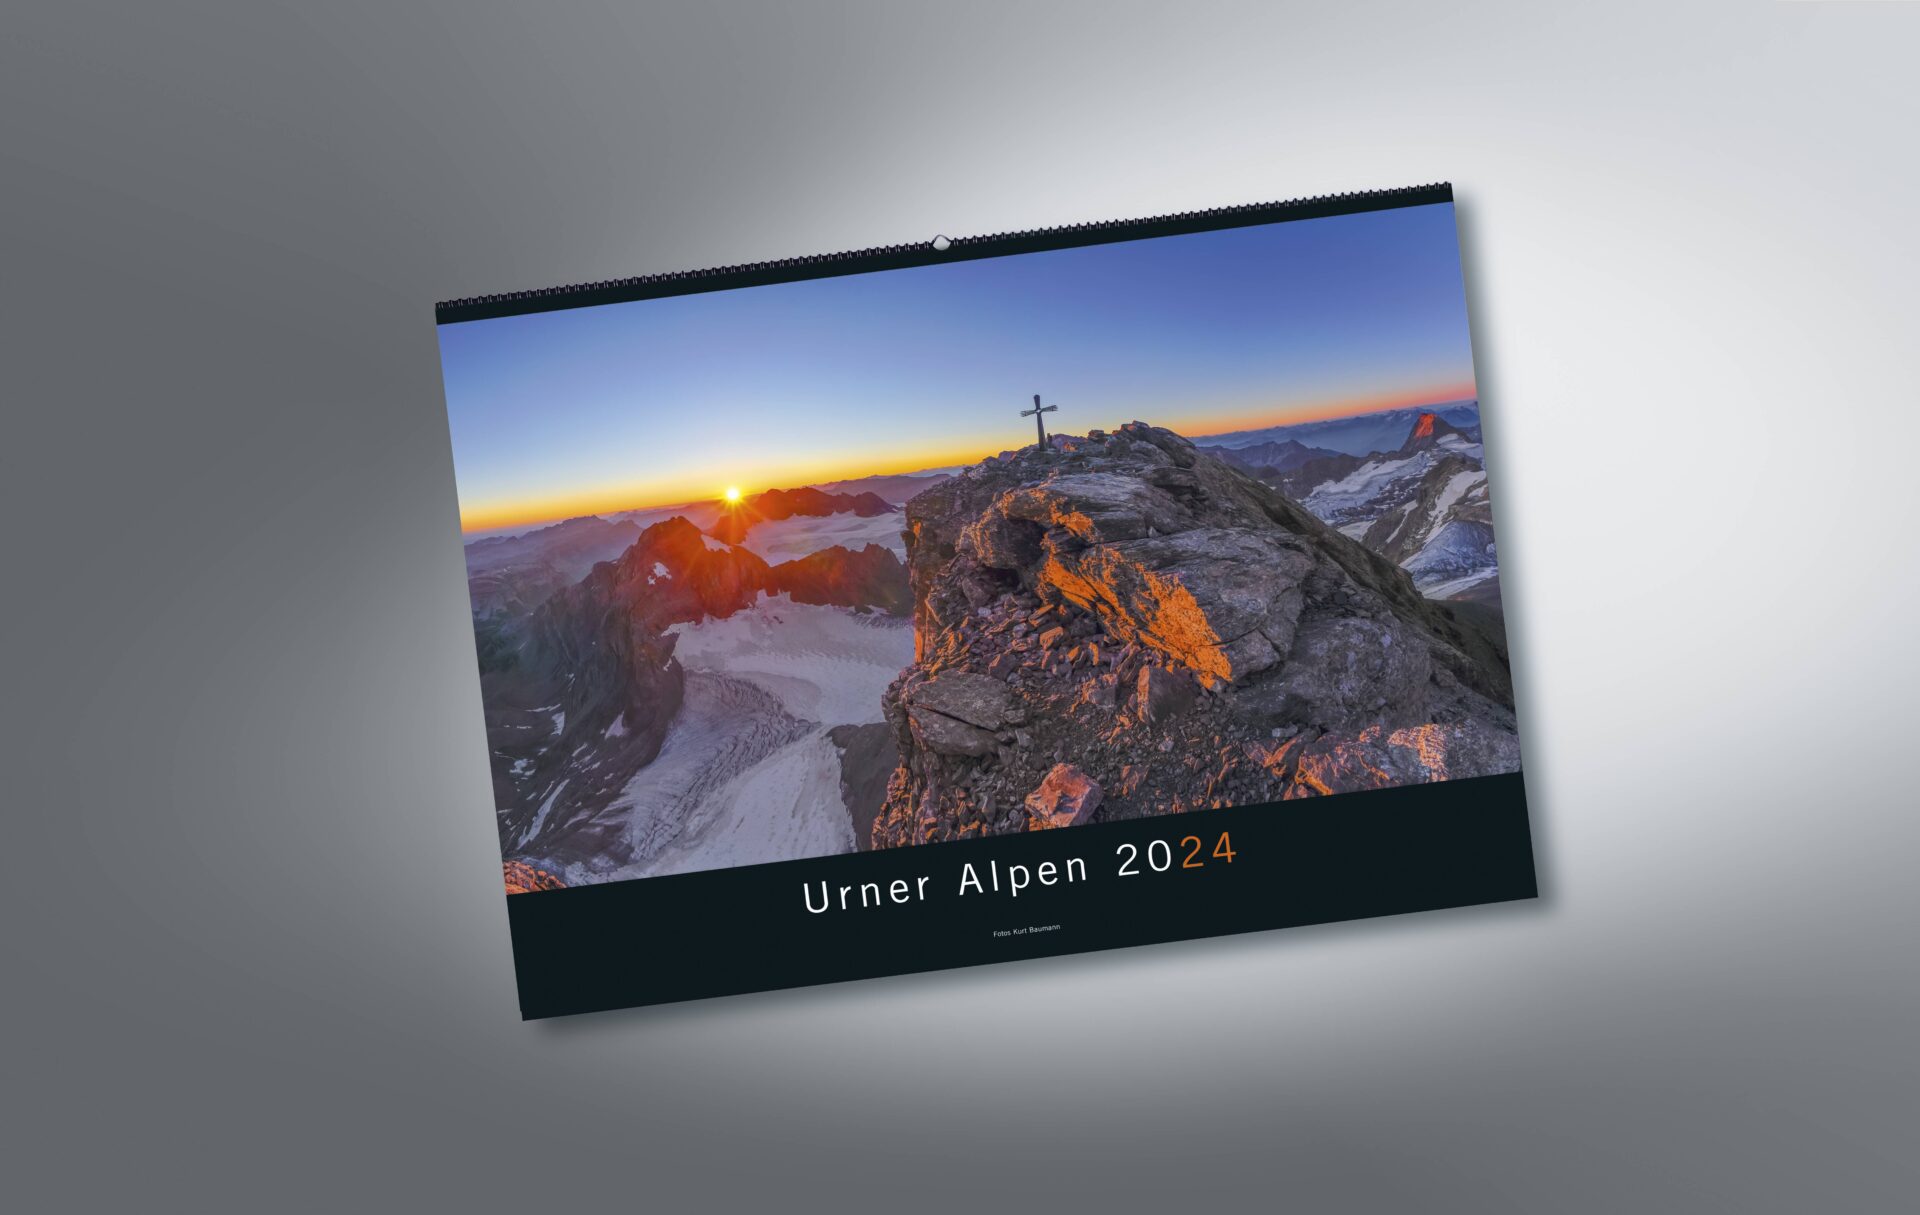 Titel Urner Alpen 2024 background2 WEB